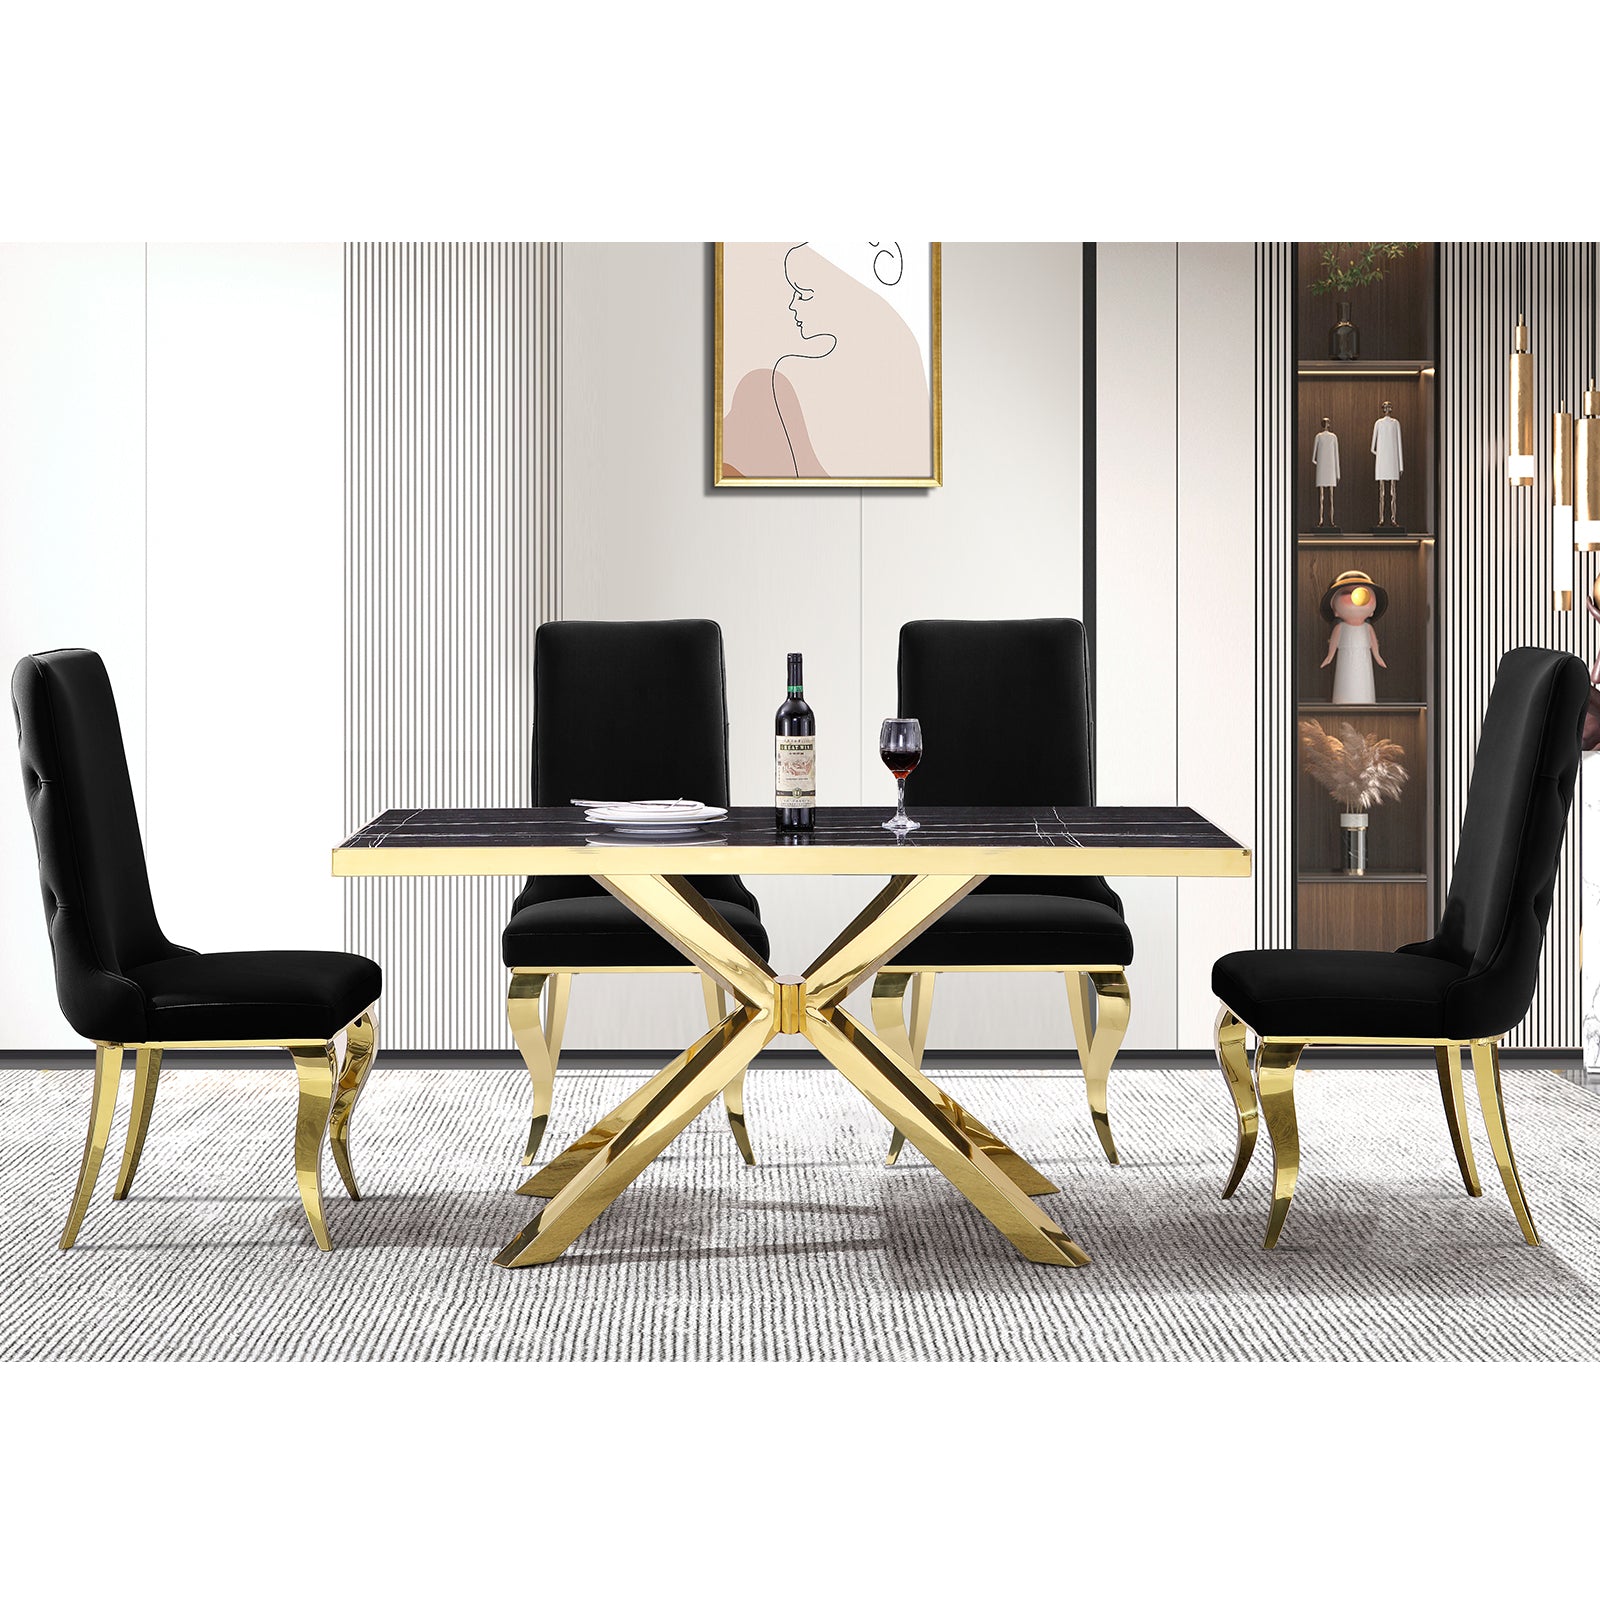 679-Set | AUZ Black and Gold Dining room Sets for 6